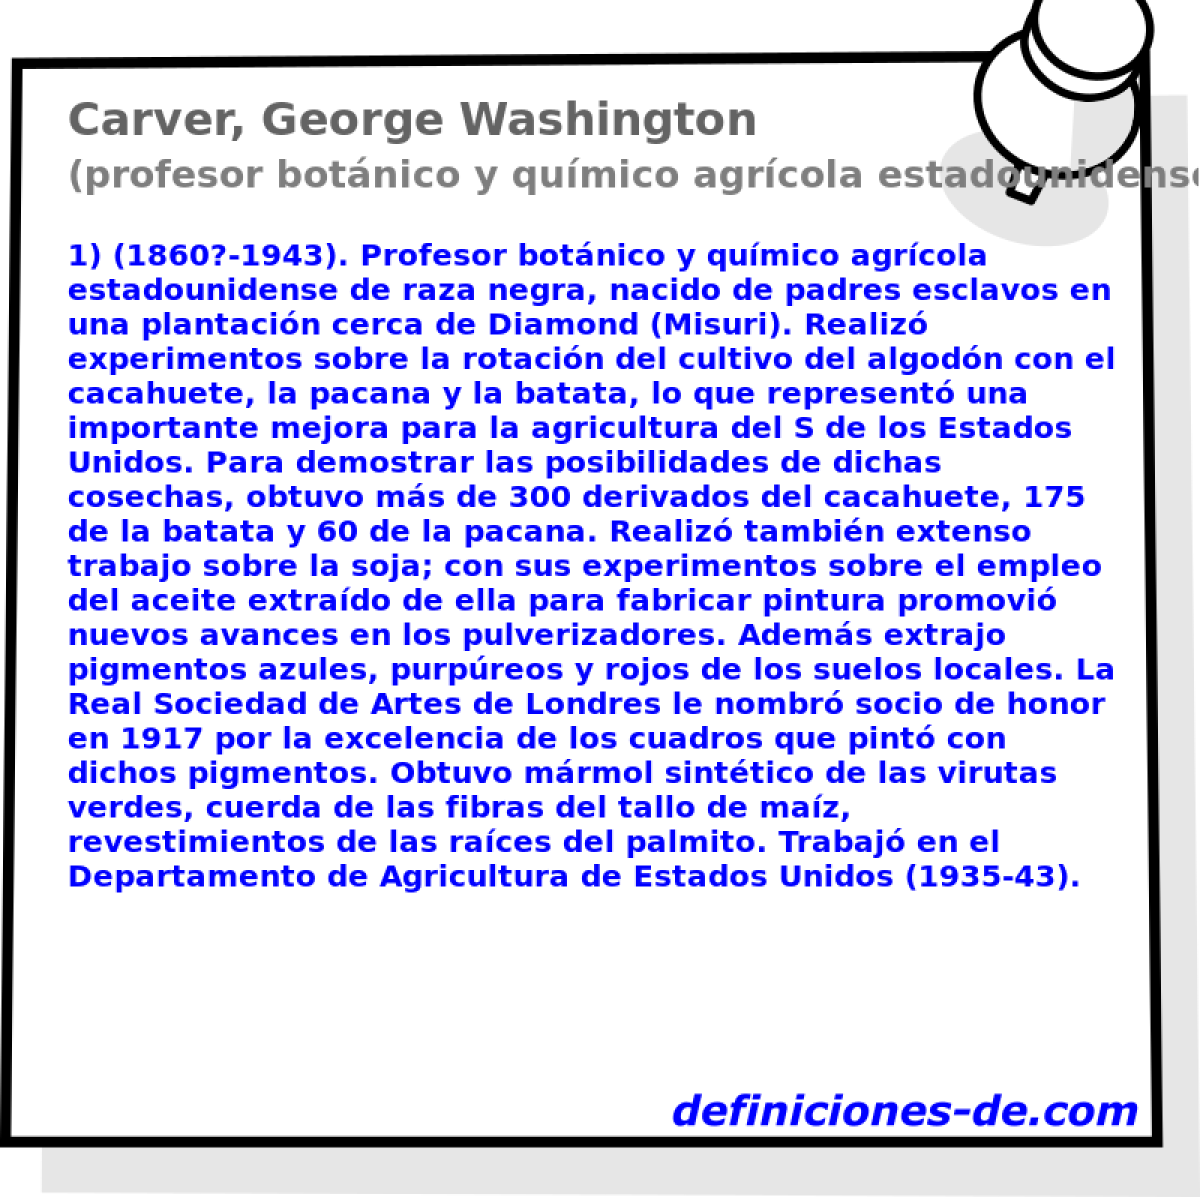 Carver, George Washington (profesor botnico y qumico agrcola estadounidense)